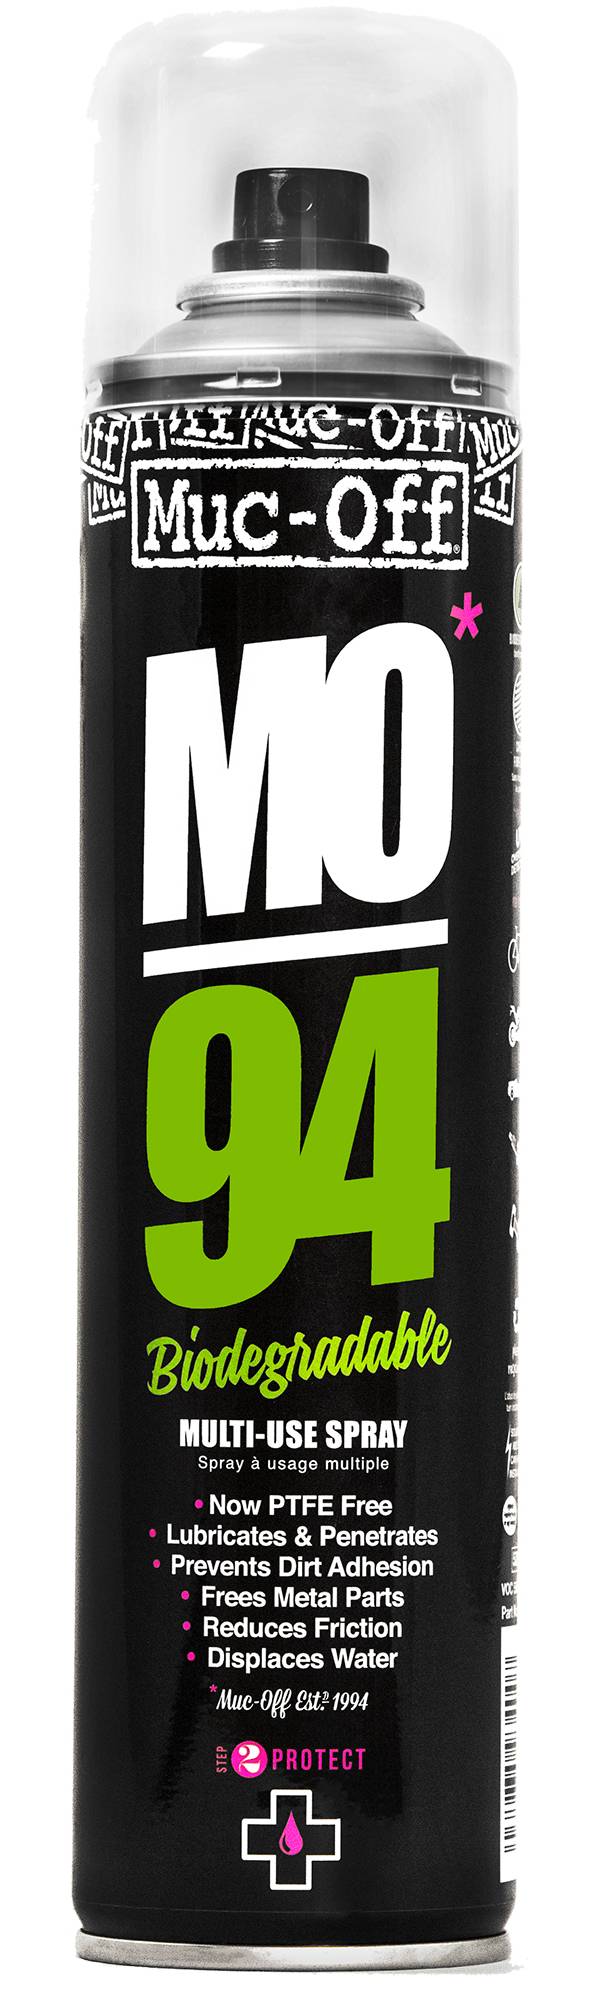 Muc-Off MO-94 400ml Multi-use Spray product image